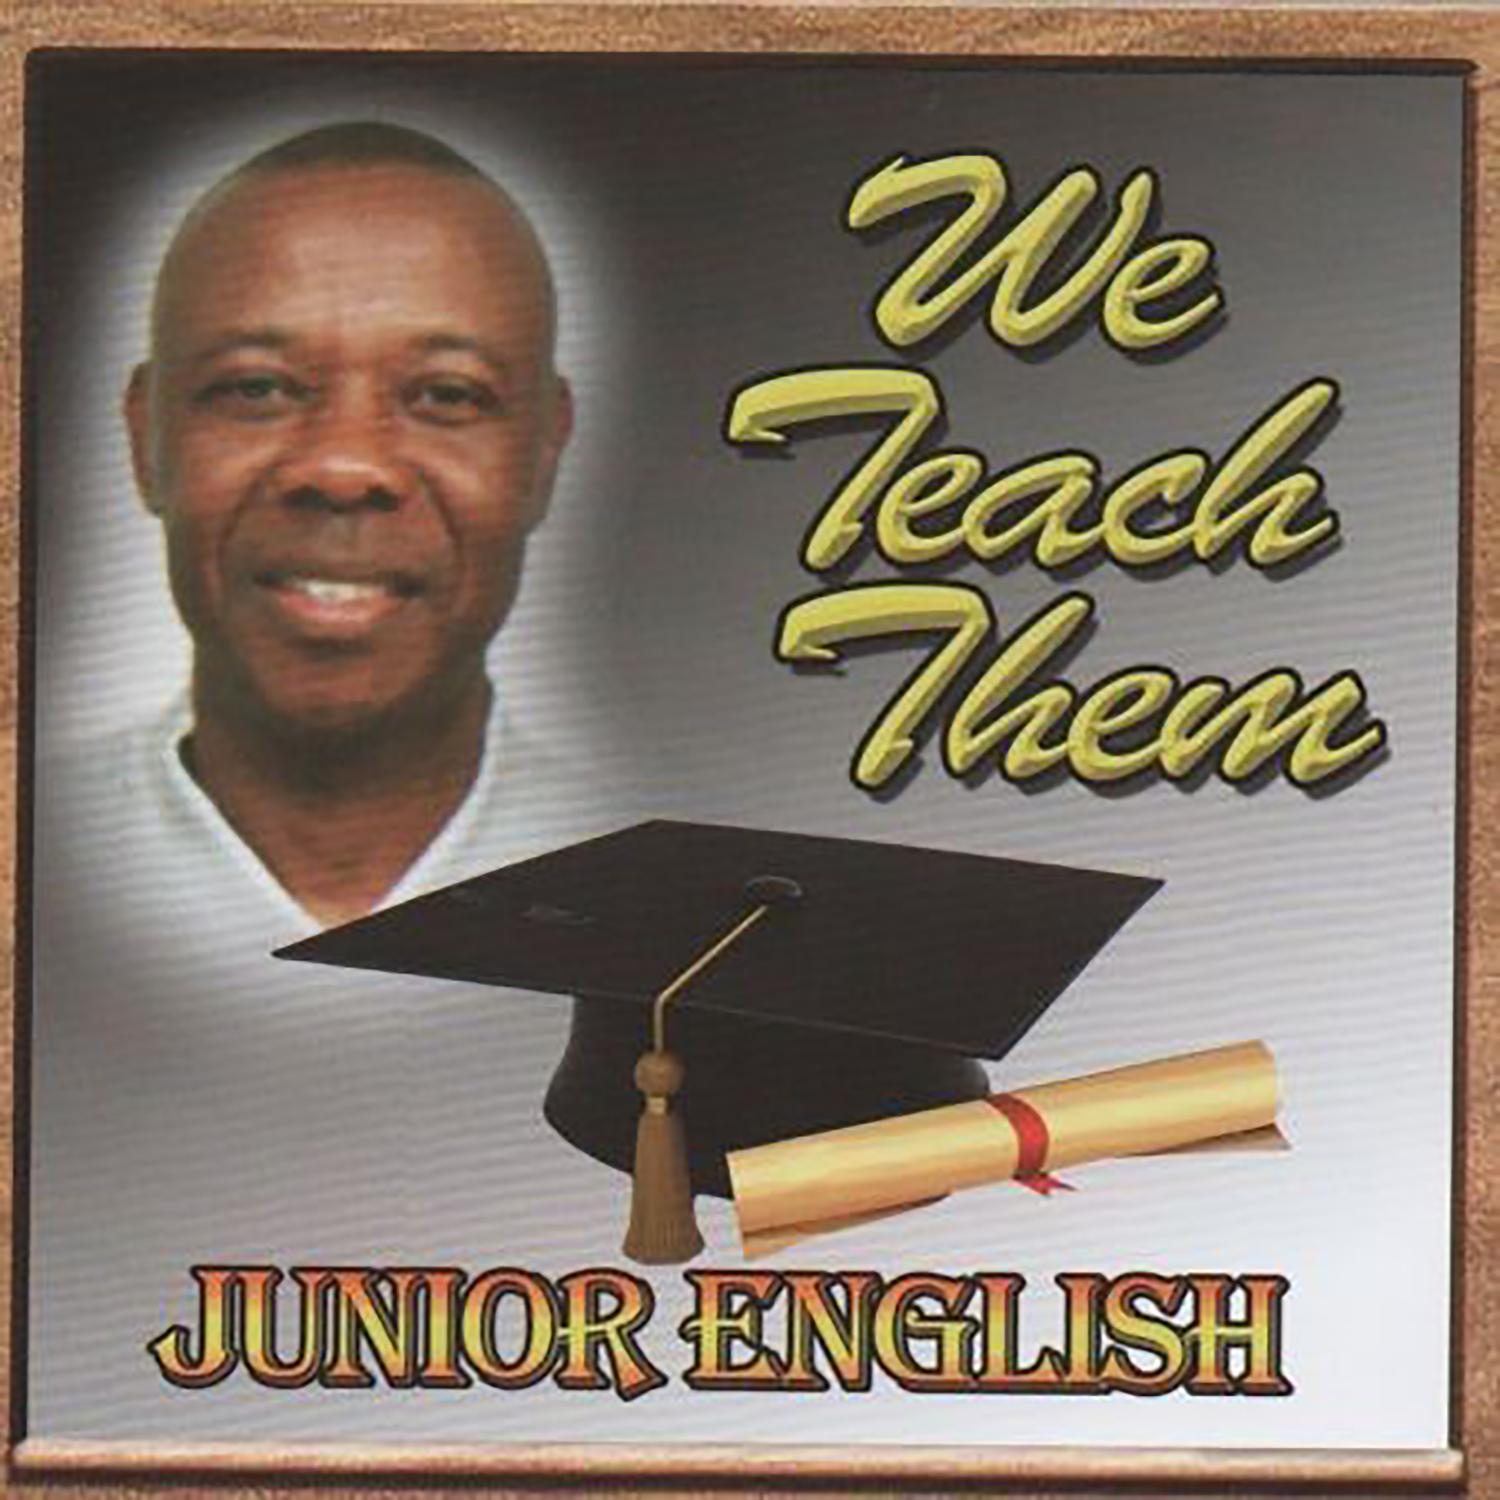 Junior English - A We Teach Dem